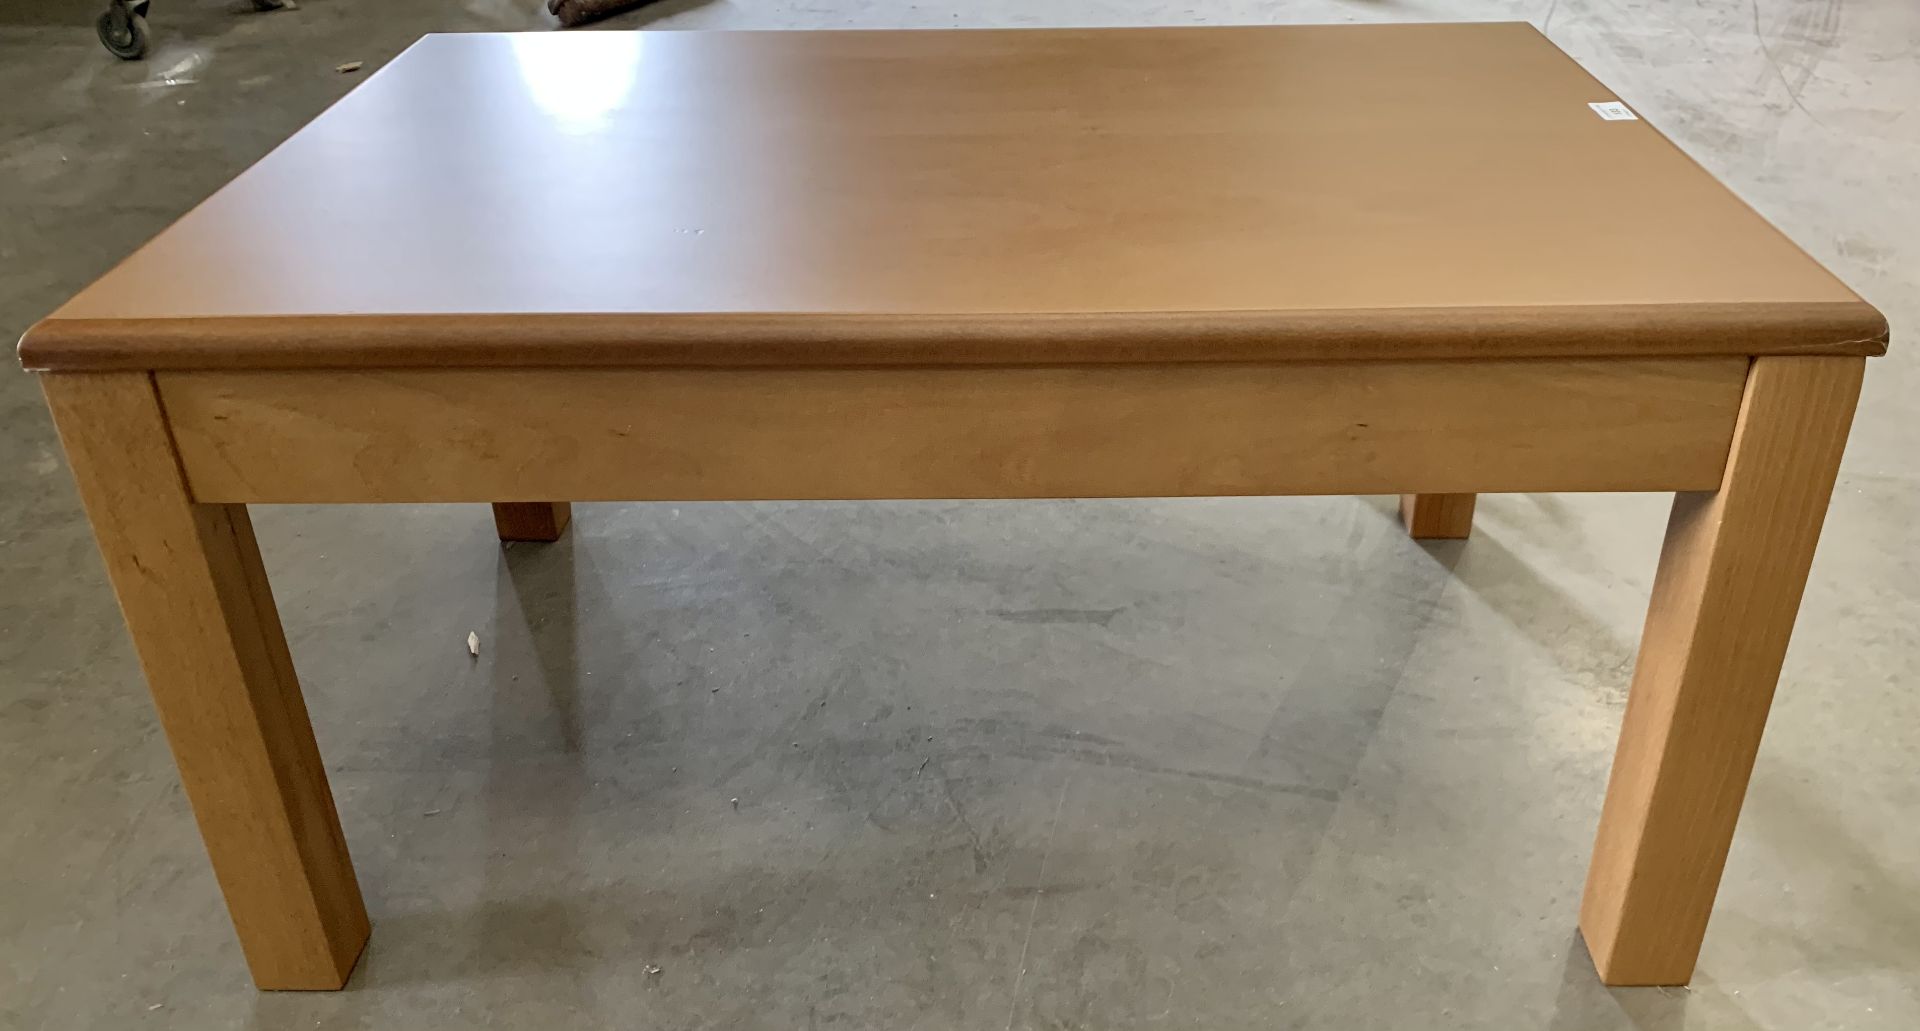 Hardwood finish coffee table - 60cm x 90cm x 45 - built up - slight damage to corners